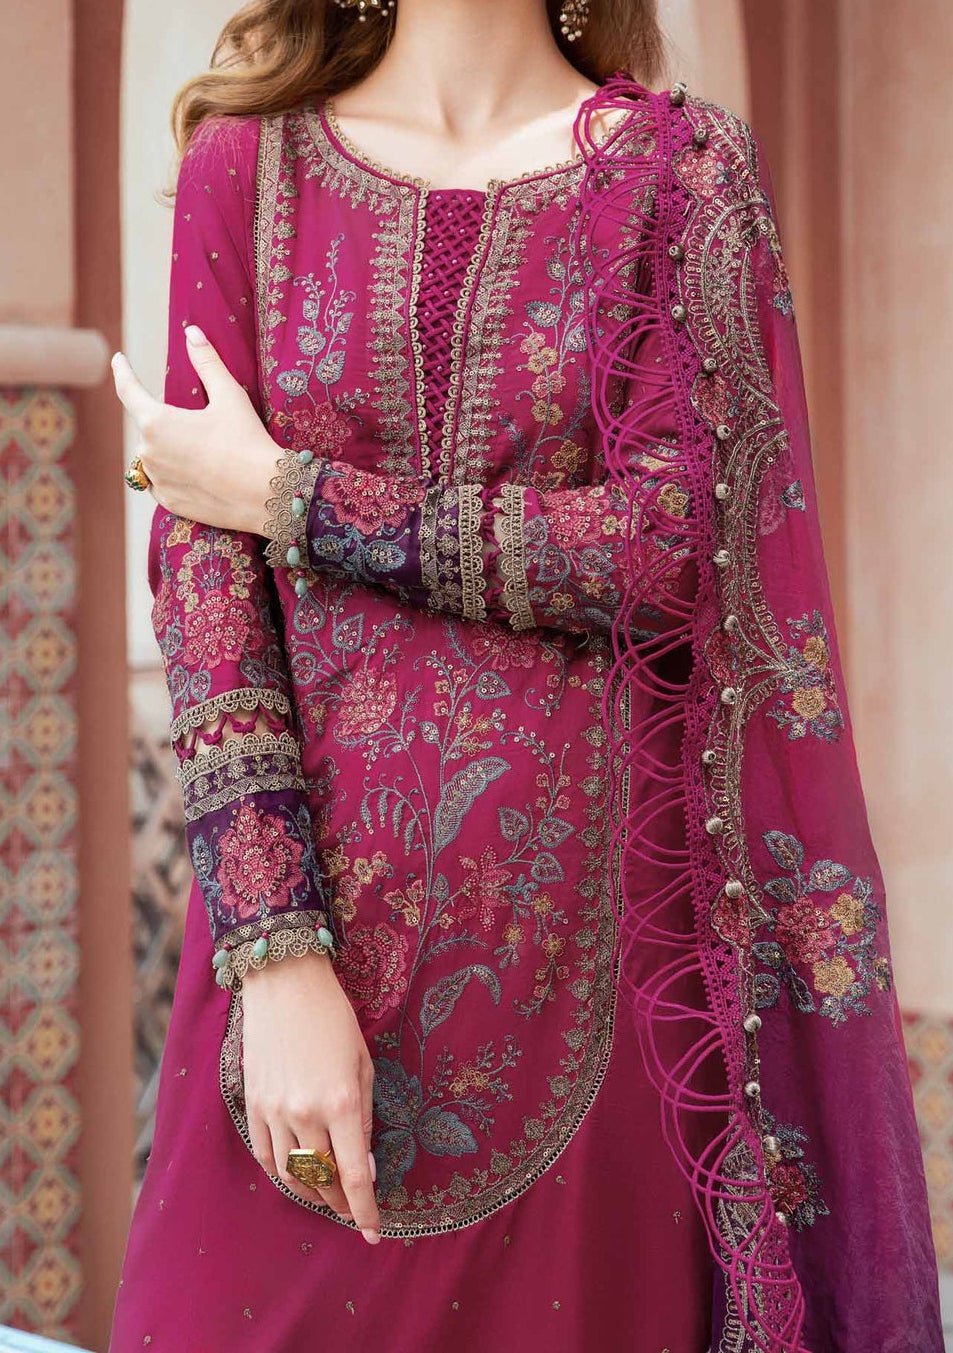 Maria.B Sateen Pakistani Luxury Cotton Satin Dress - db24092